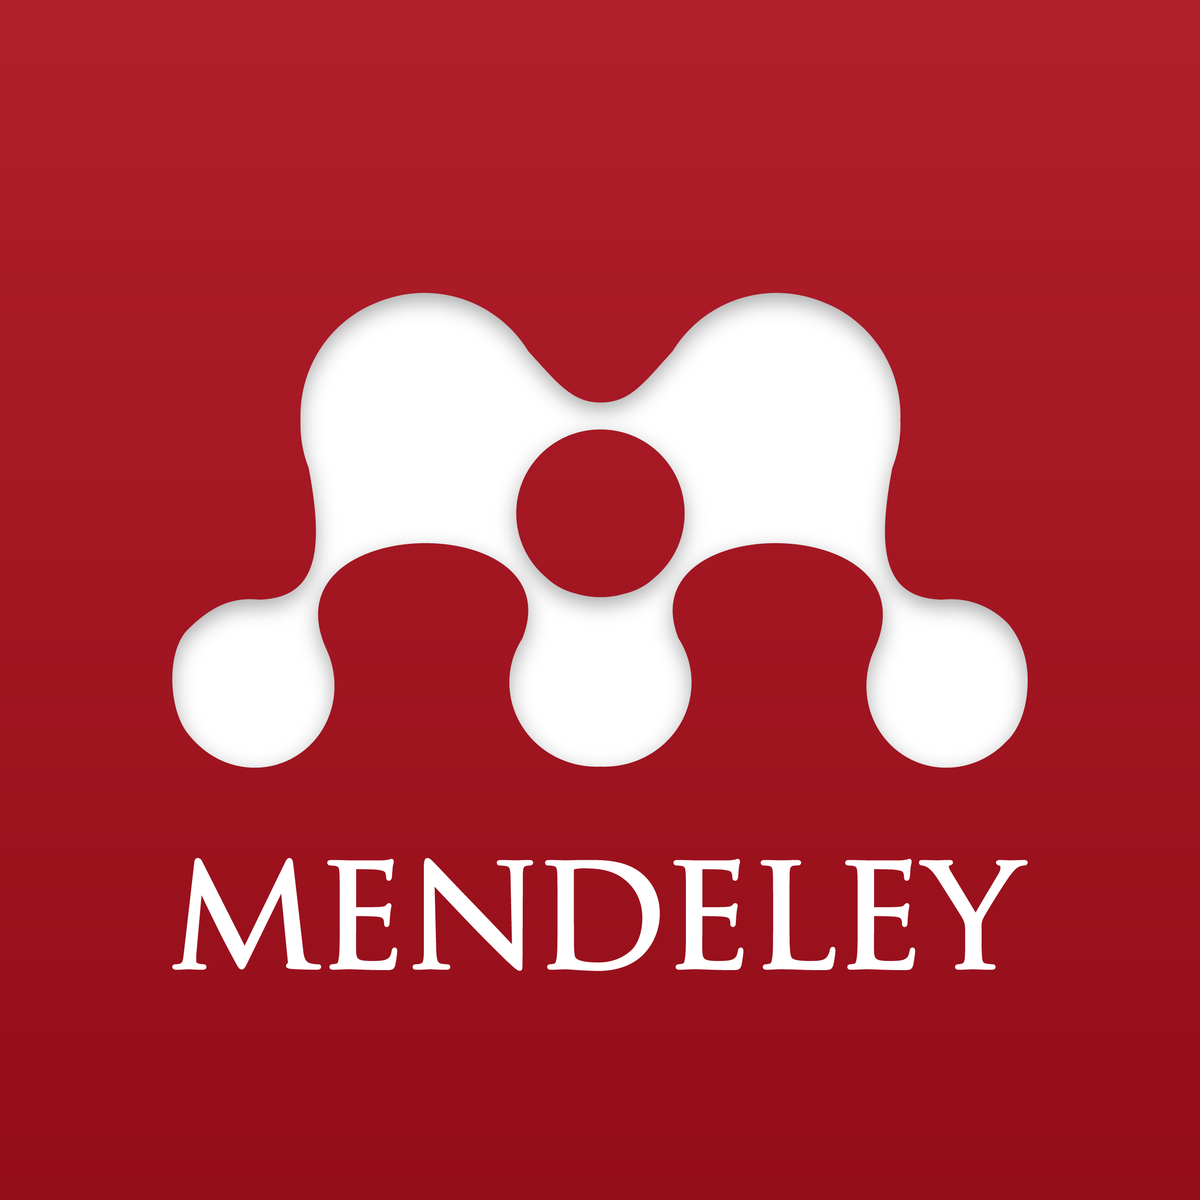 Mendeley - Wikipedia